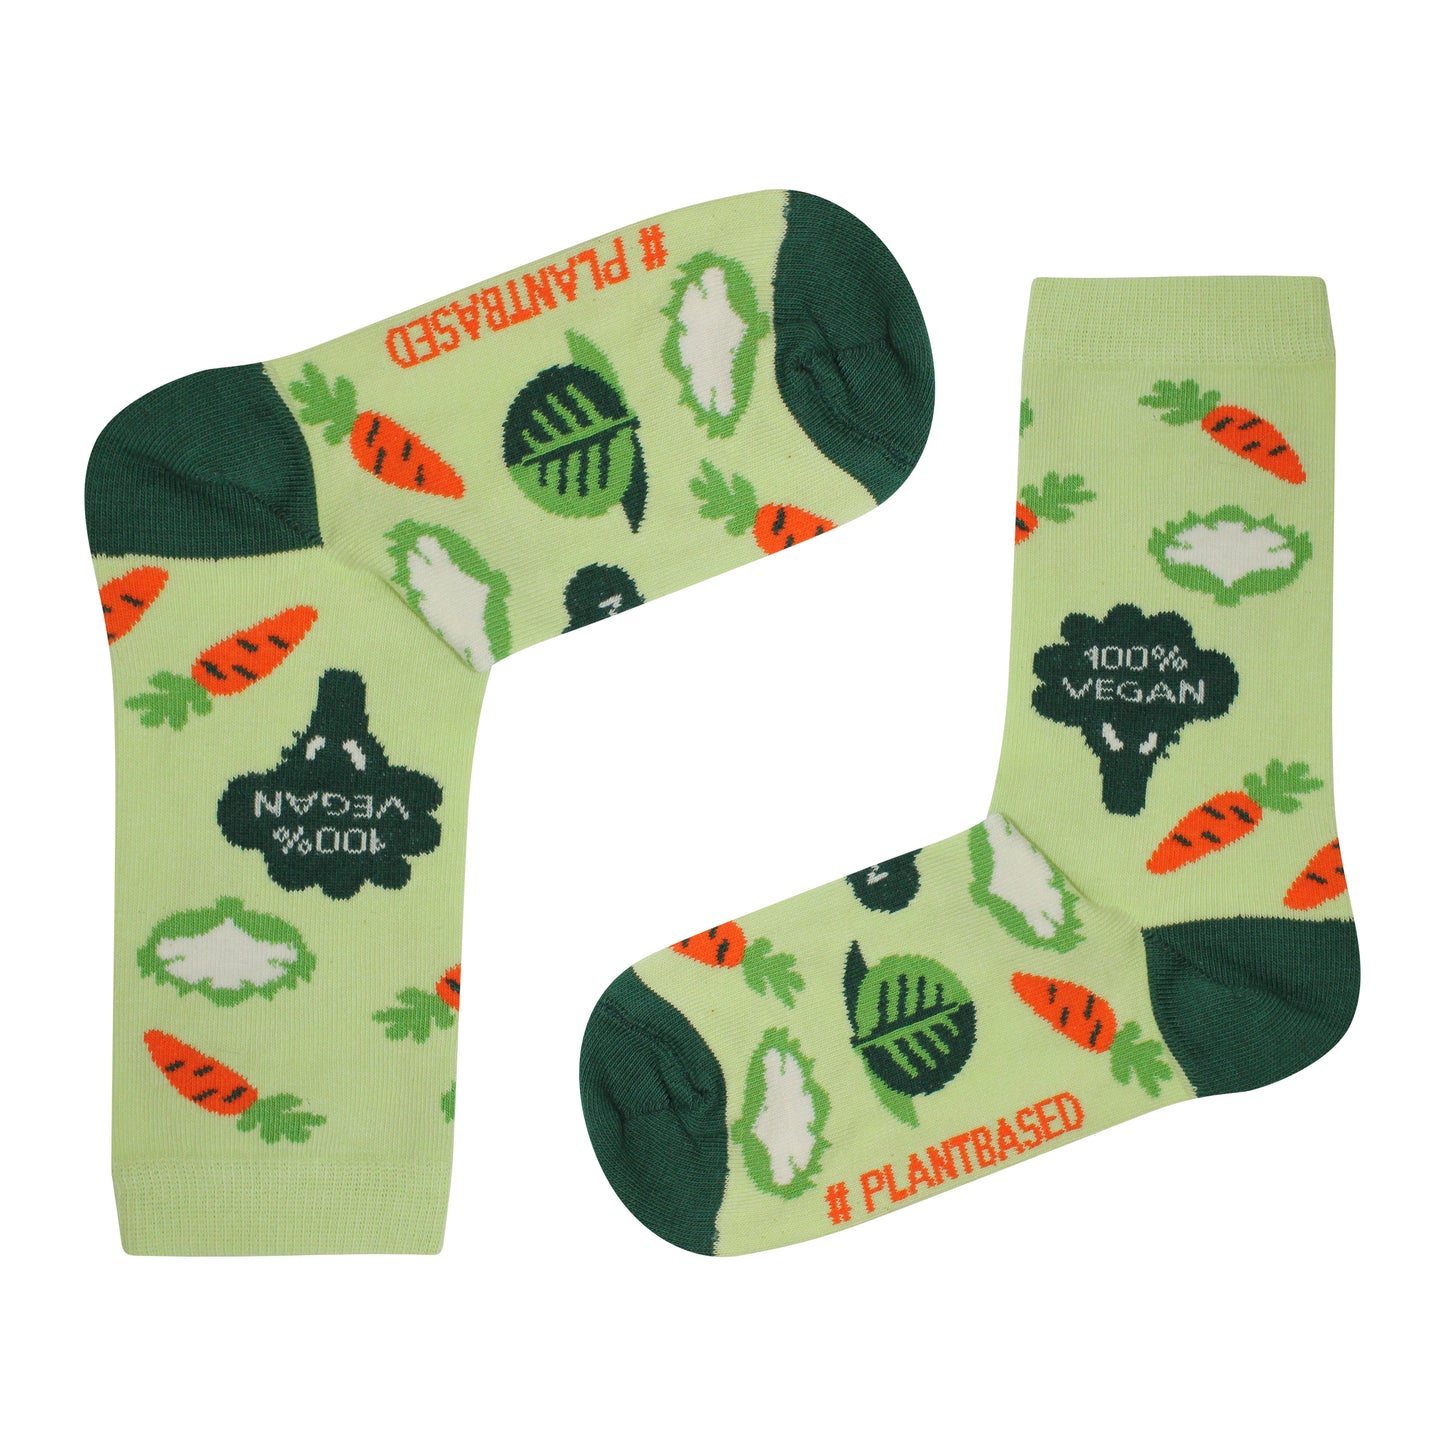 'Veggie Medley' Vegan Socks